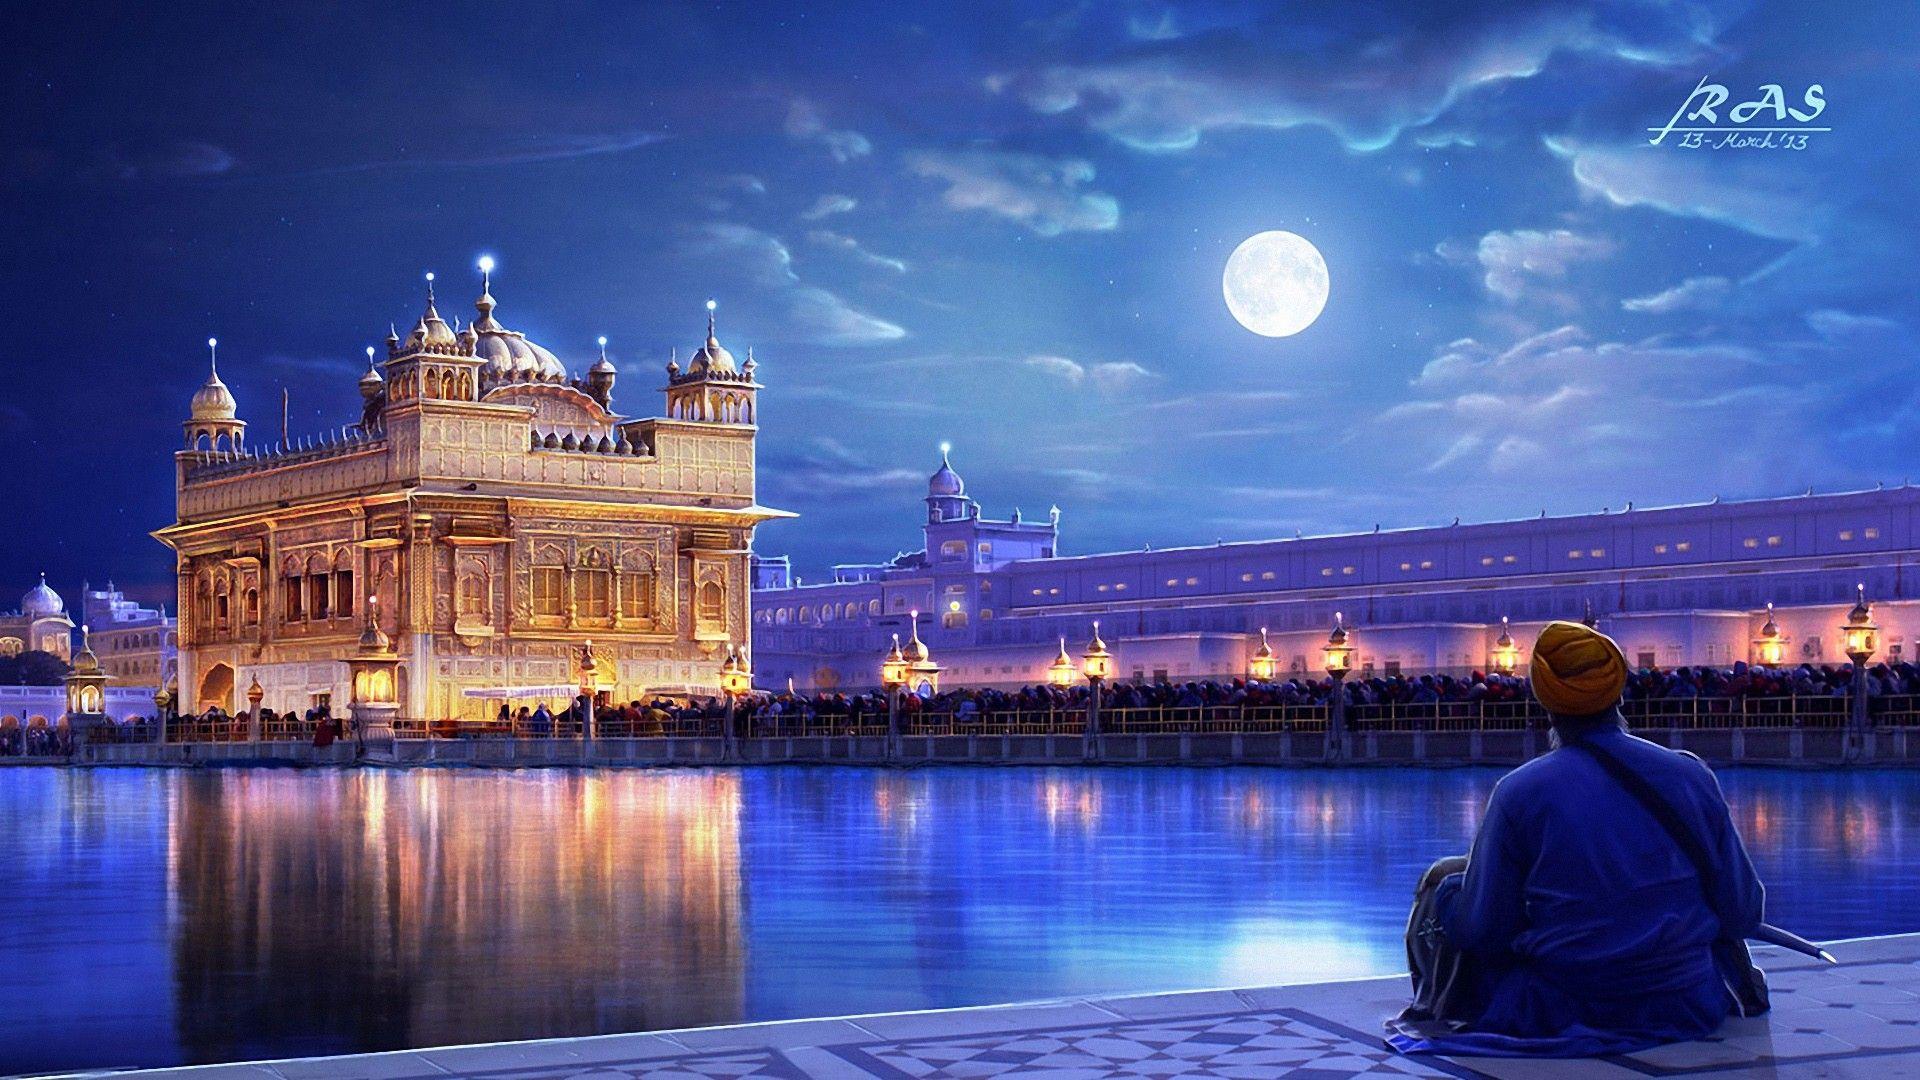 Golden Temple Amritsar Punjab India HD Wallpaper